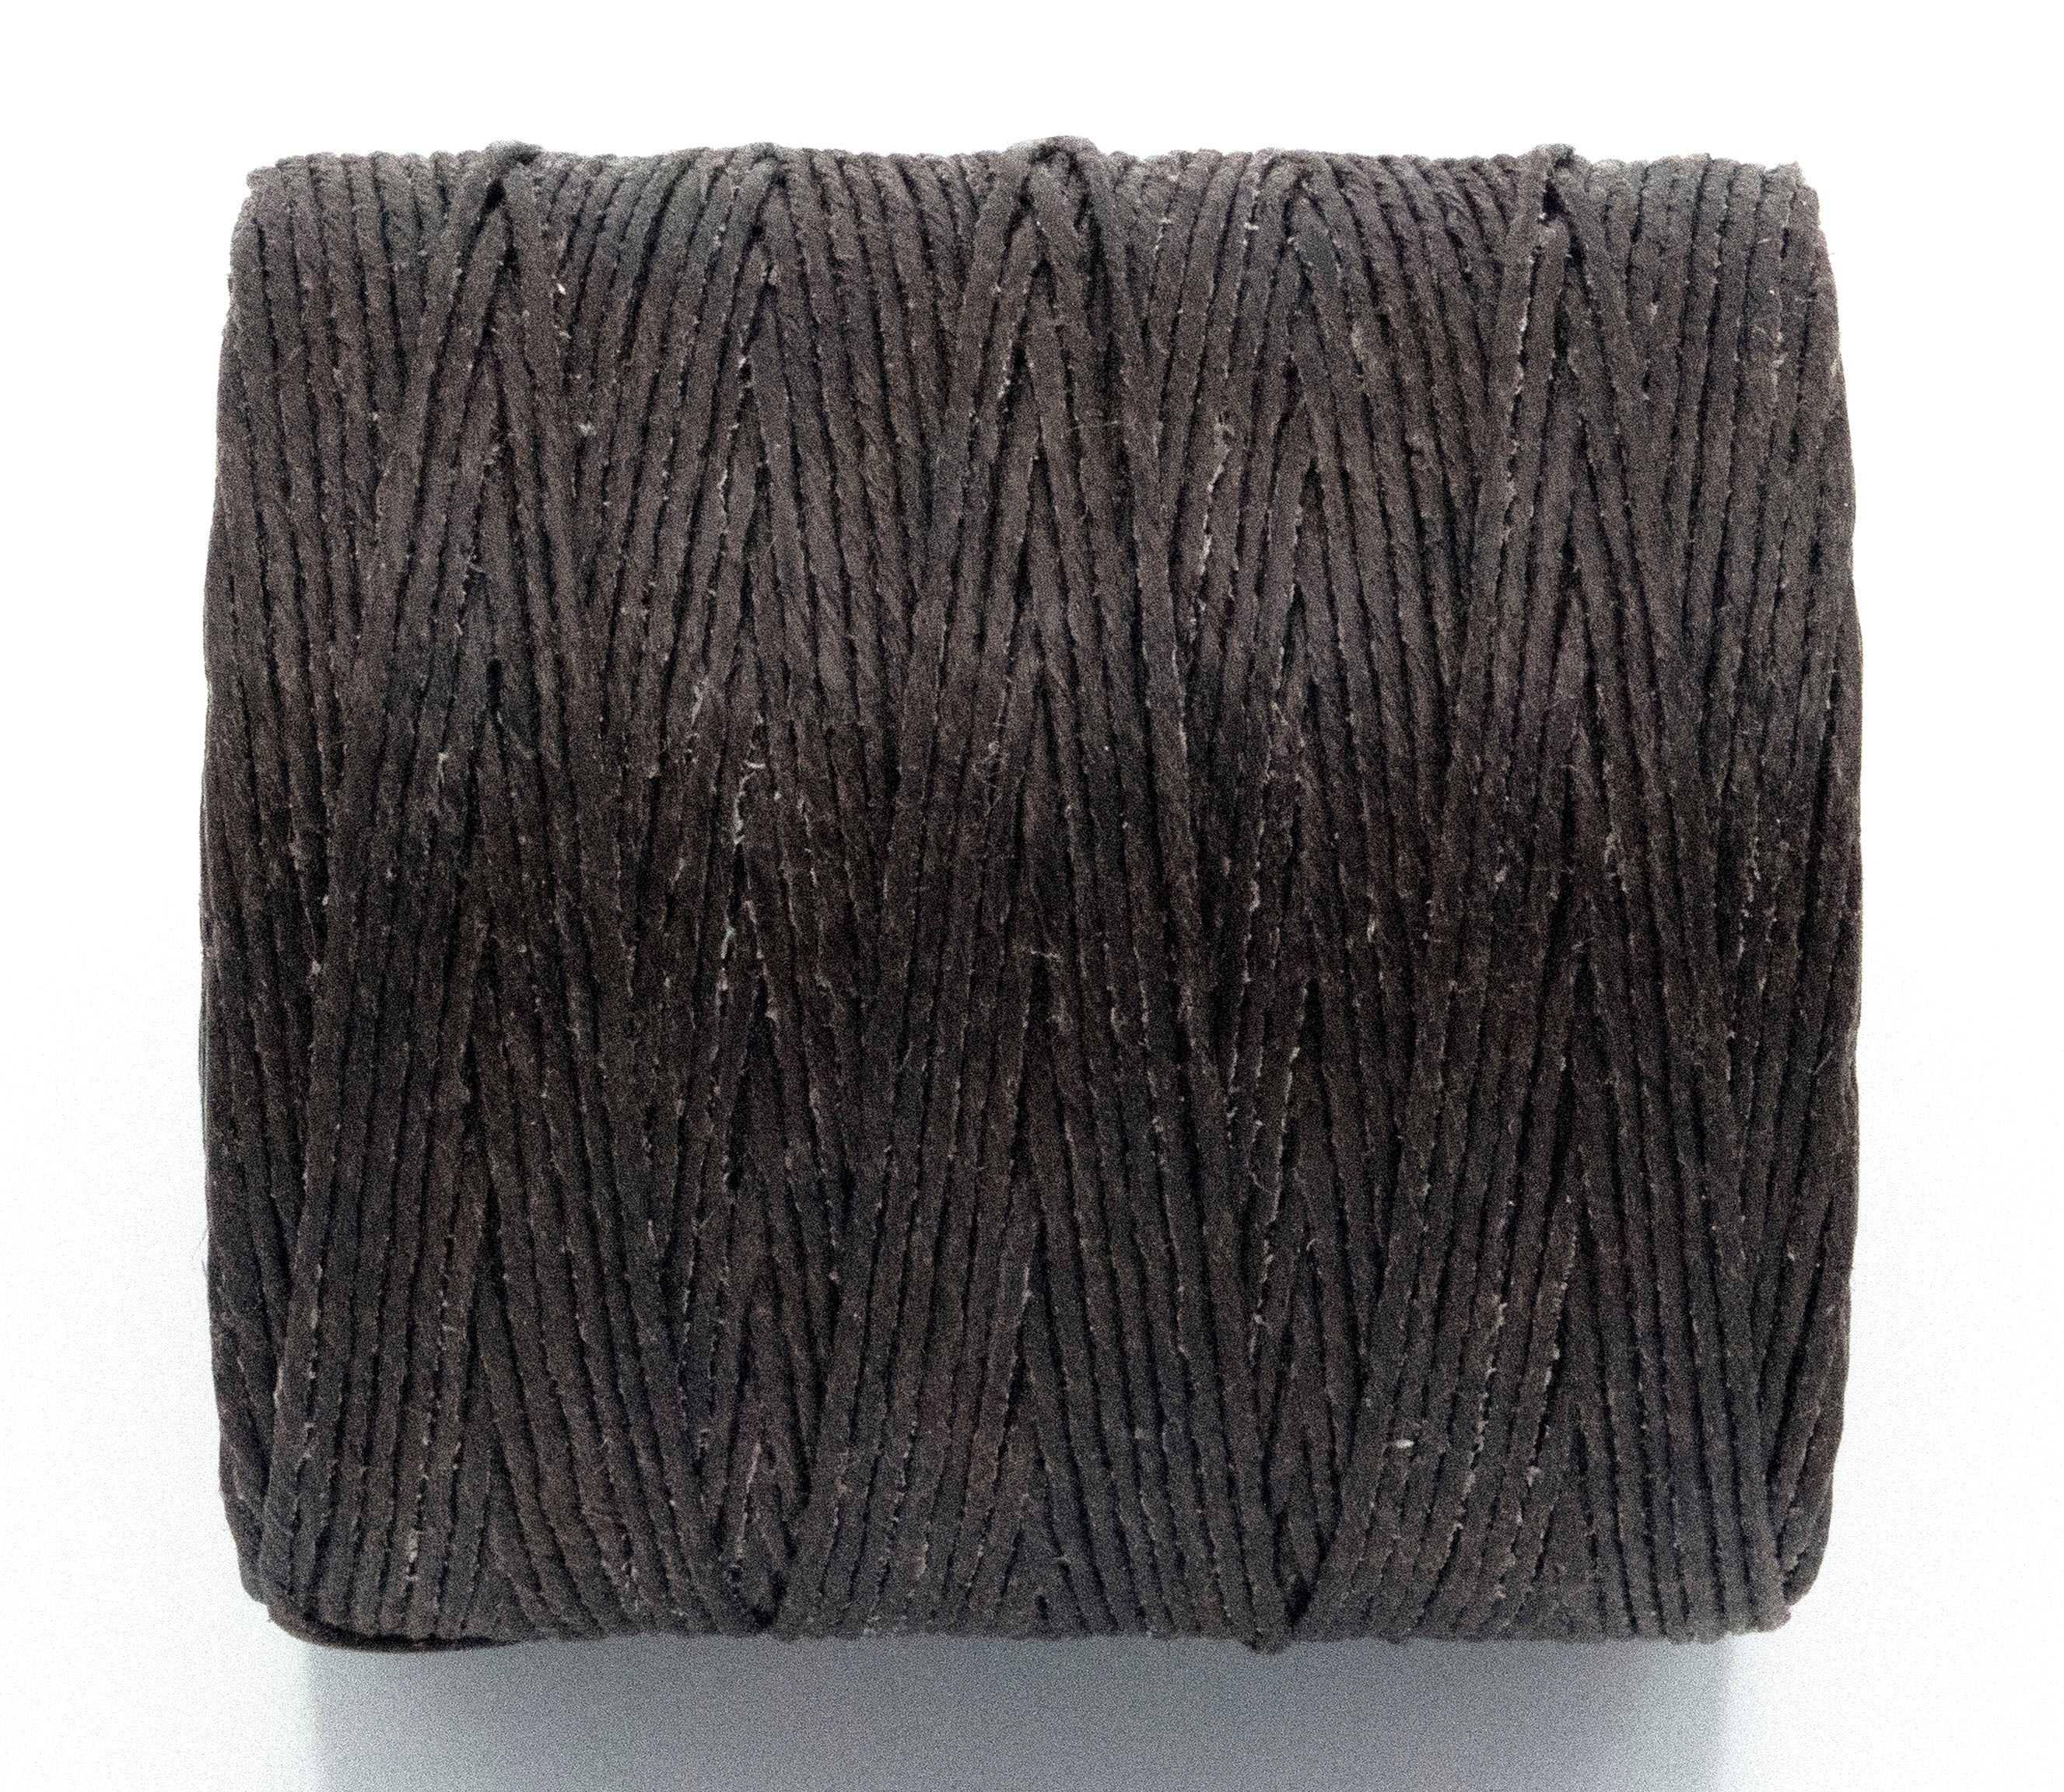 Black - somac linen waxed thread